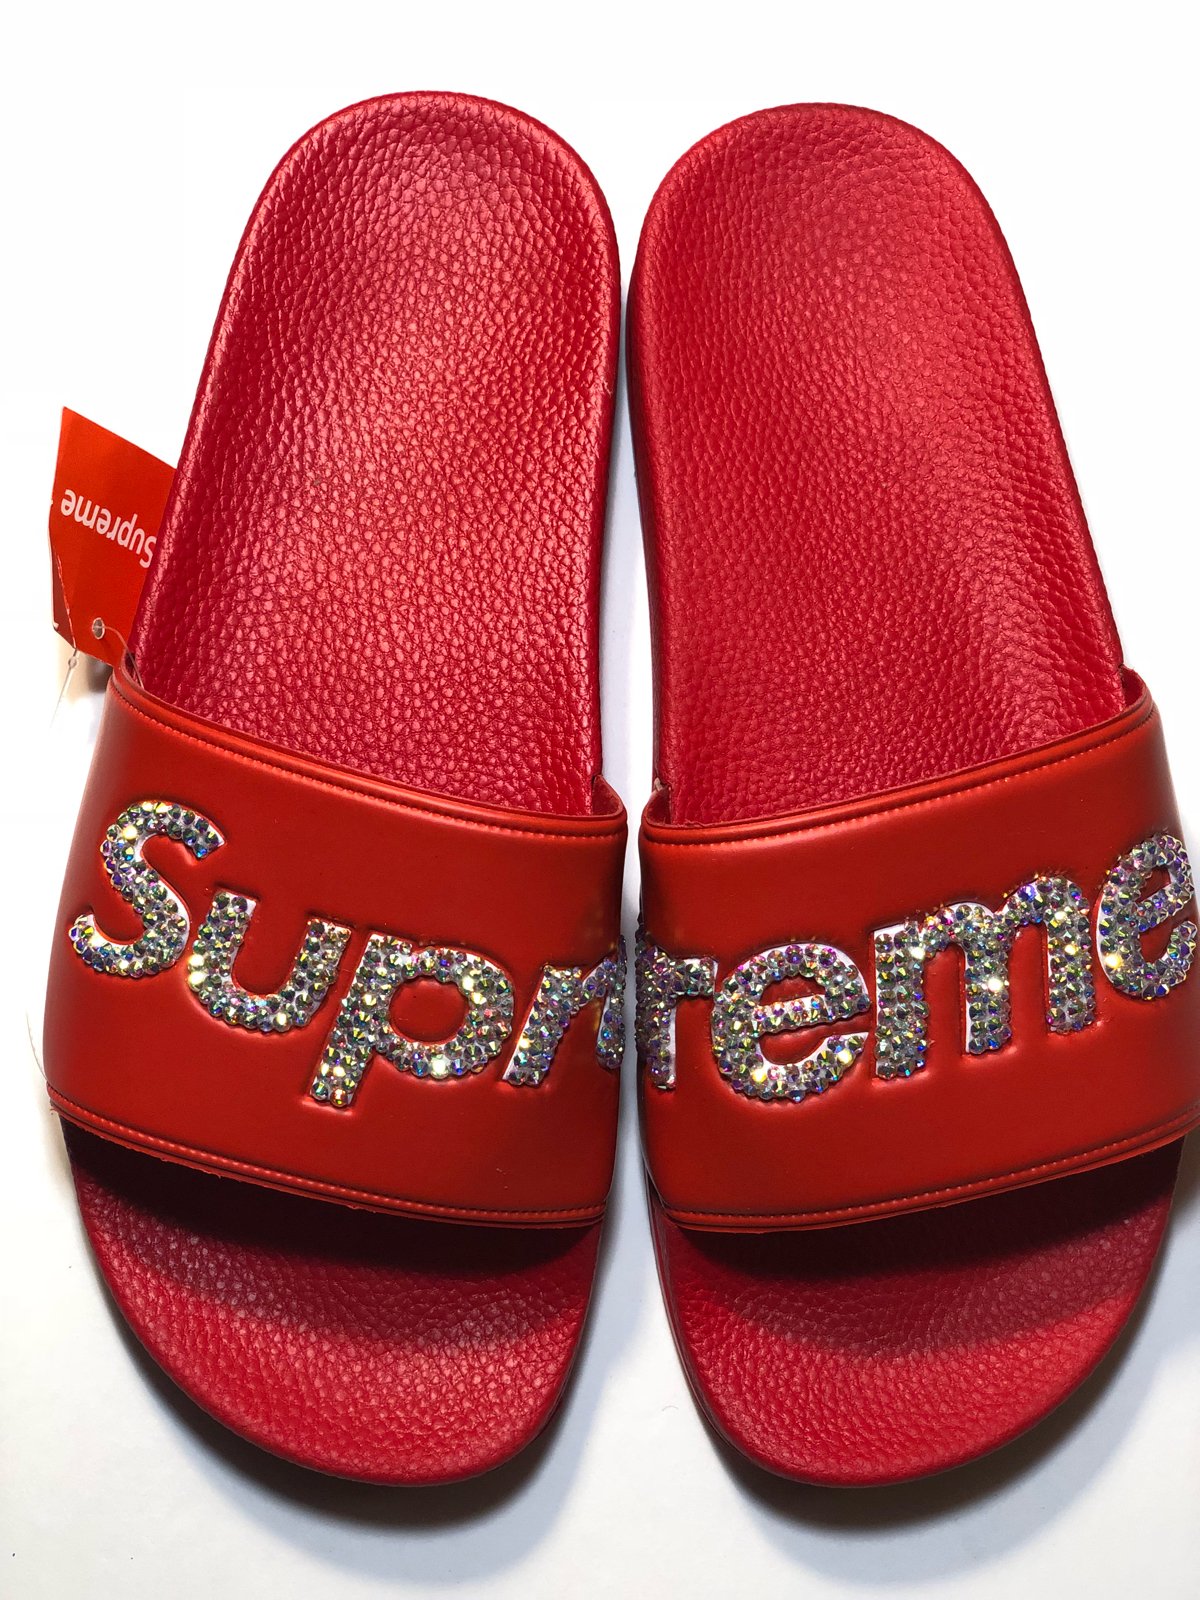 supreme slides with box